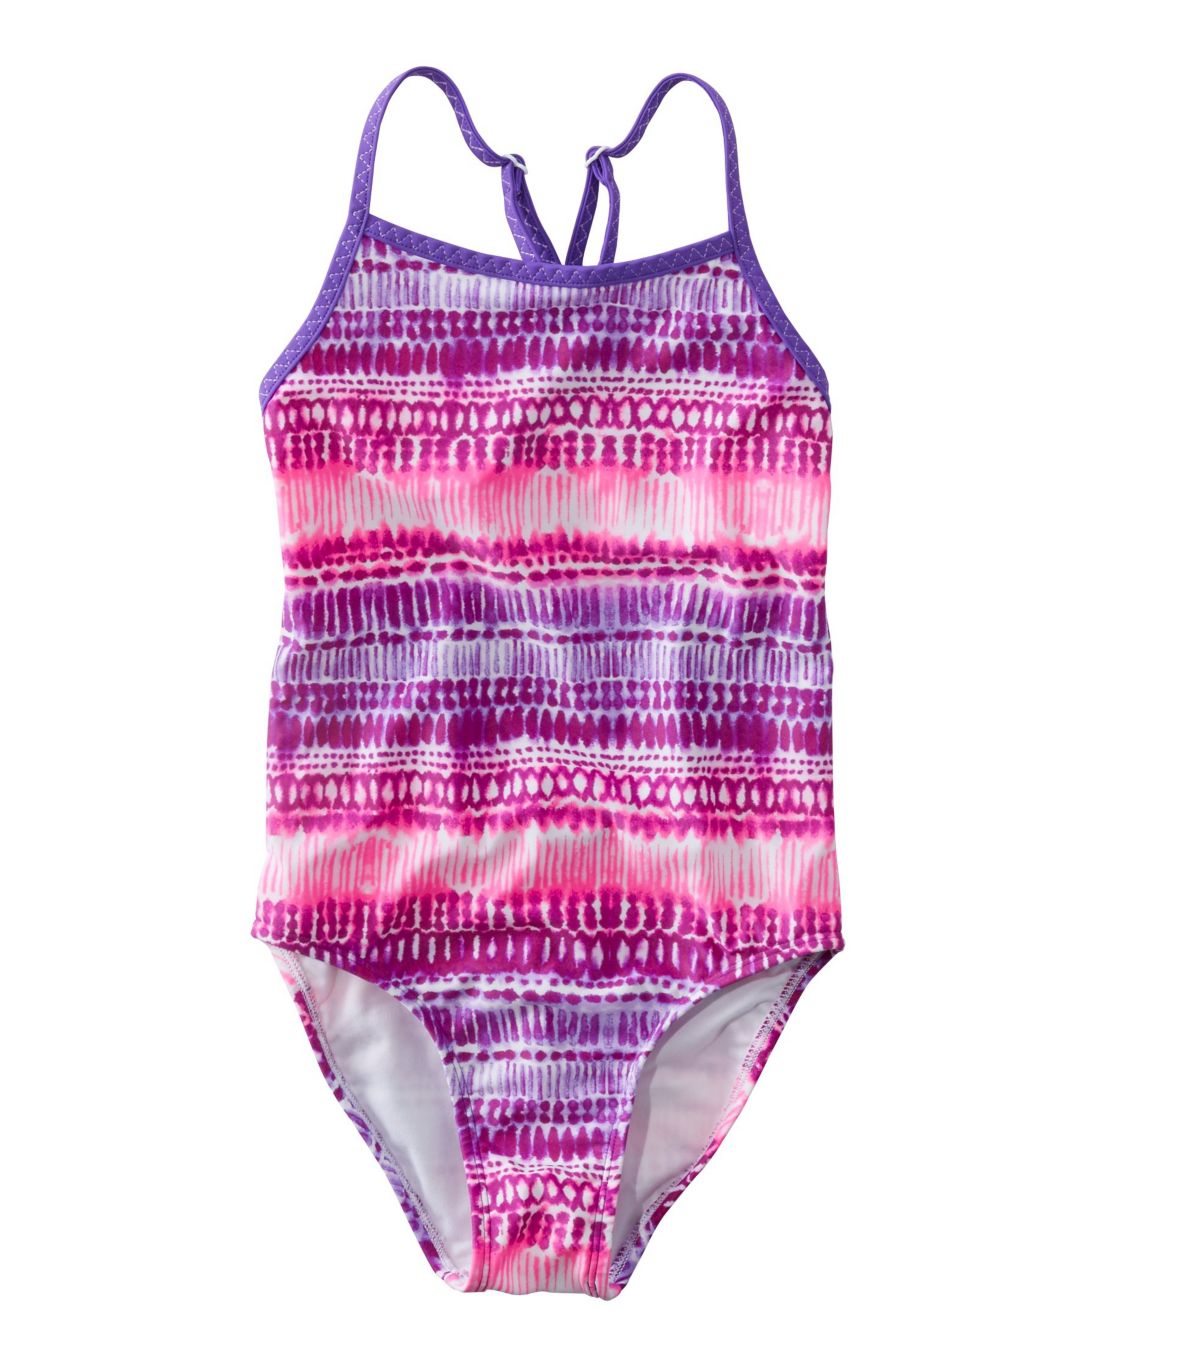 Girls’ Wave Jumper Swimsuit, One-Piece Print at L.L. Bean